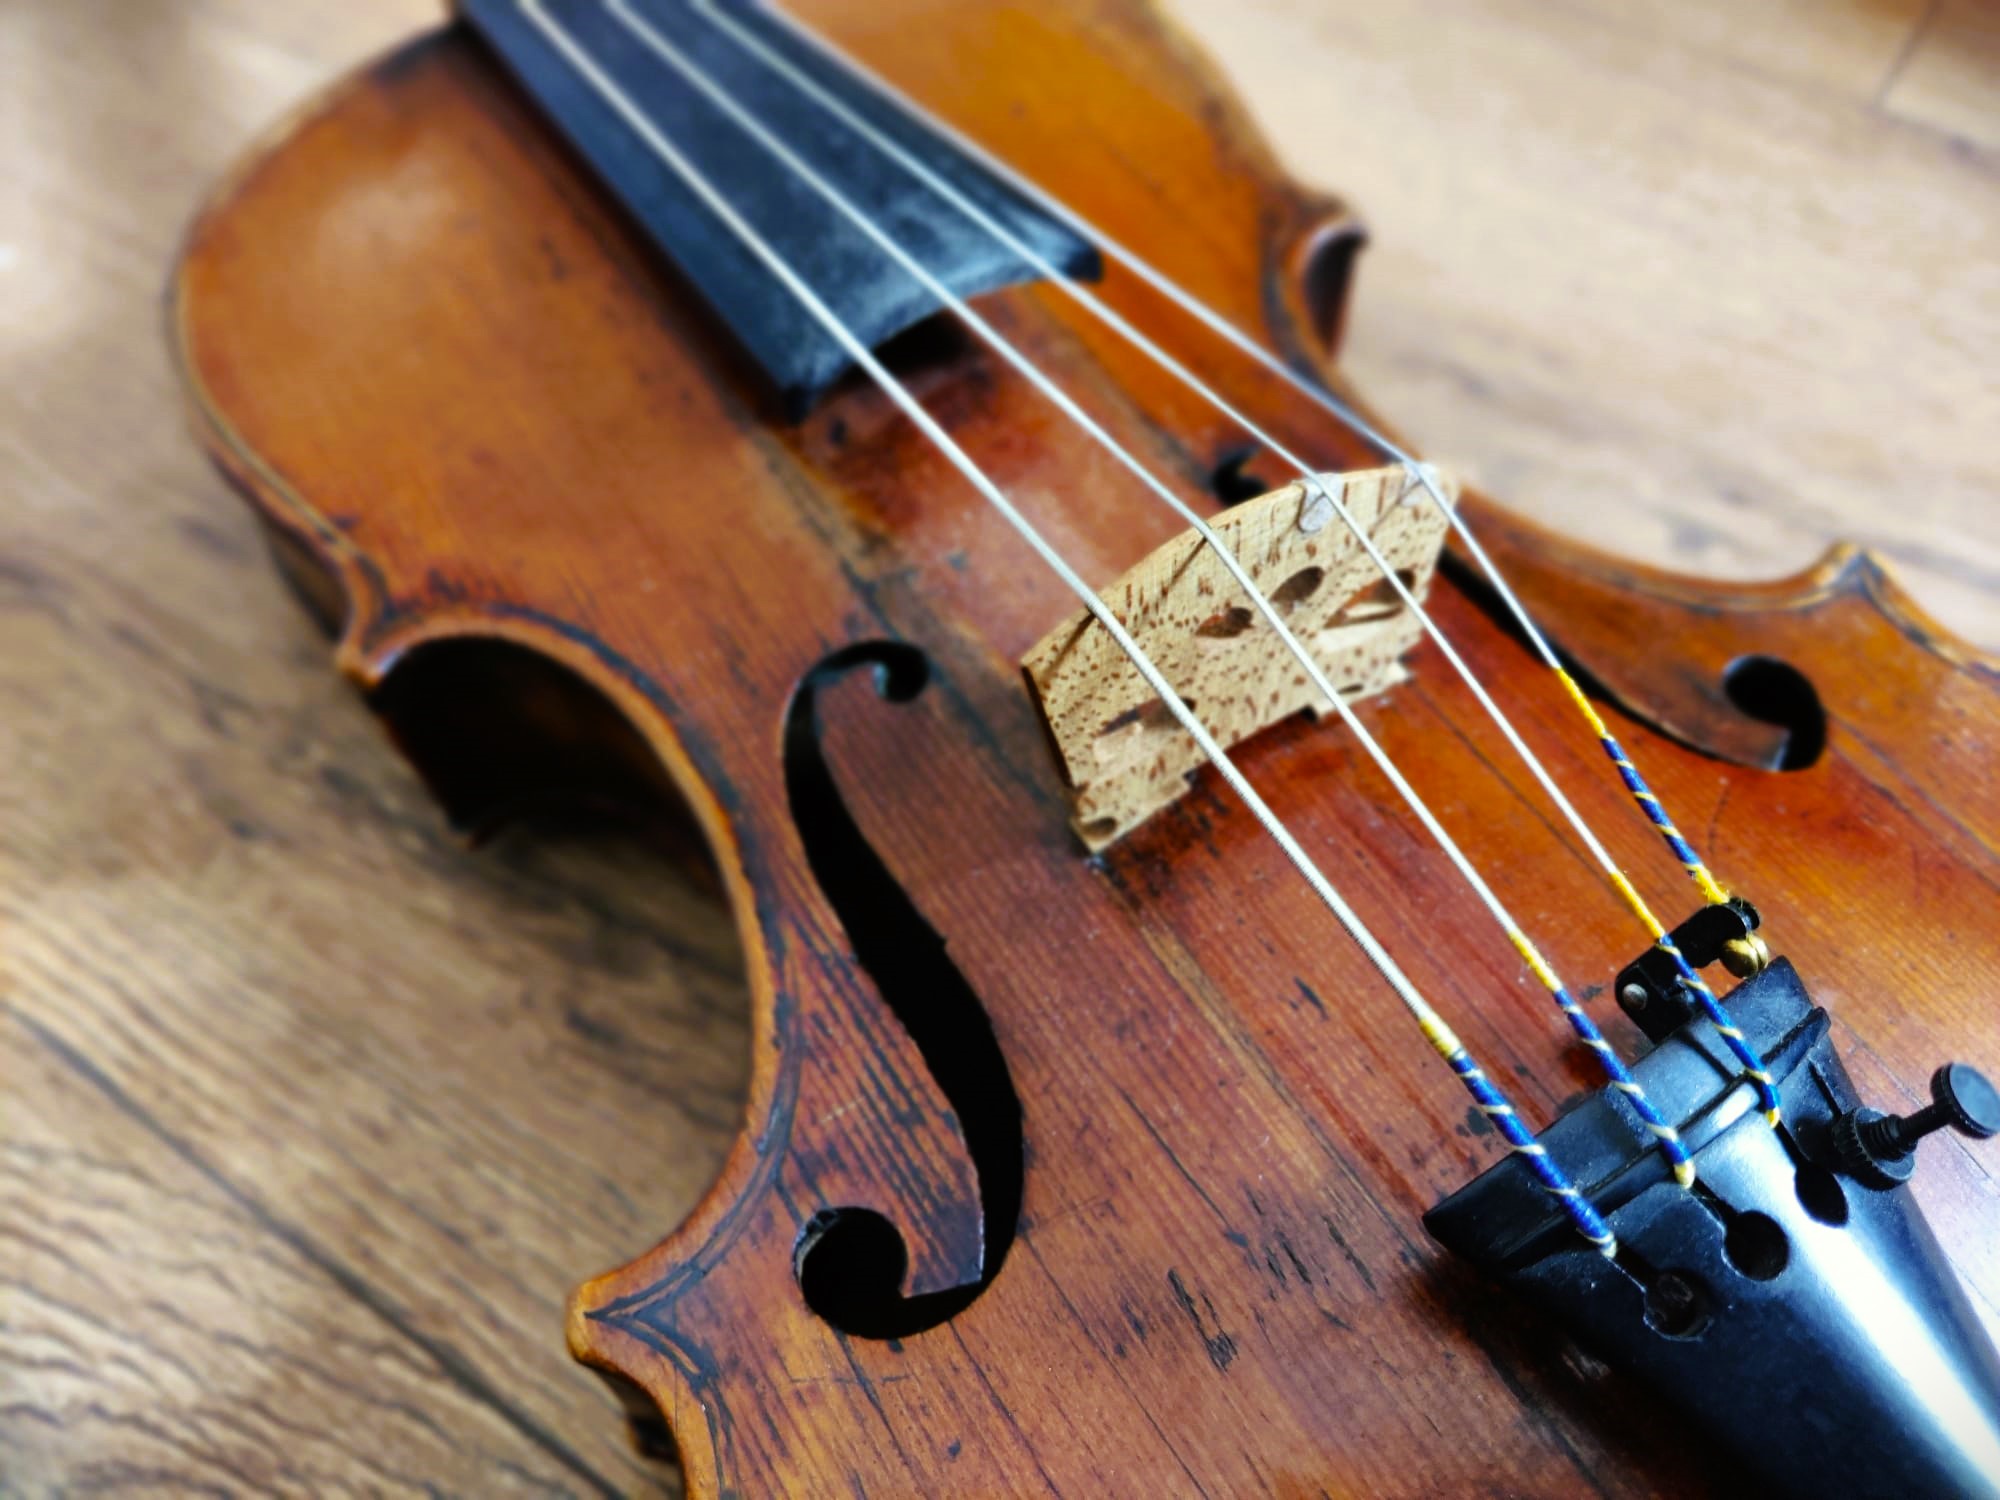 Comprehensive fiddle courses